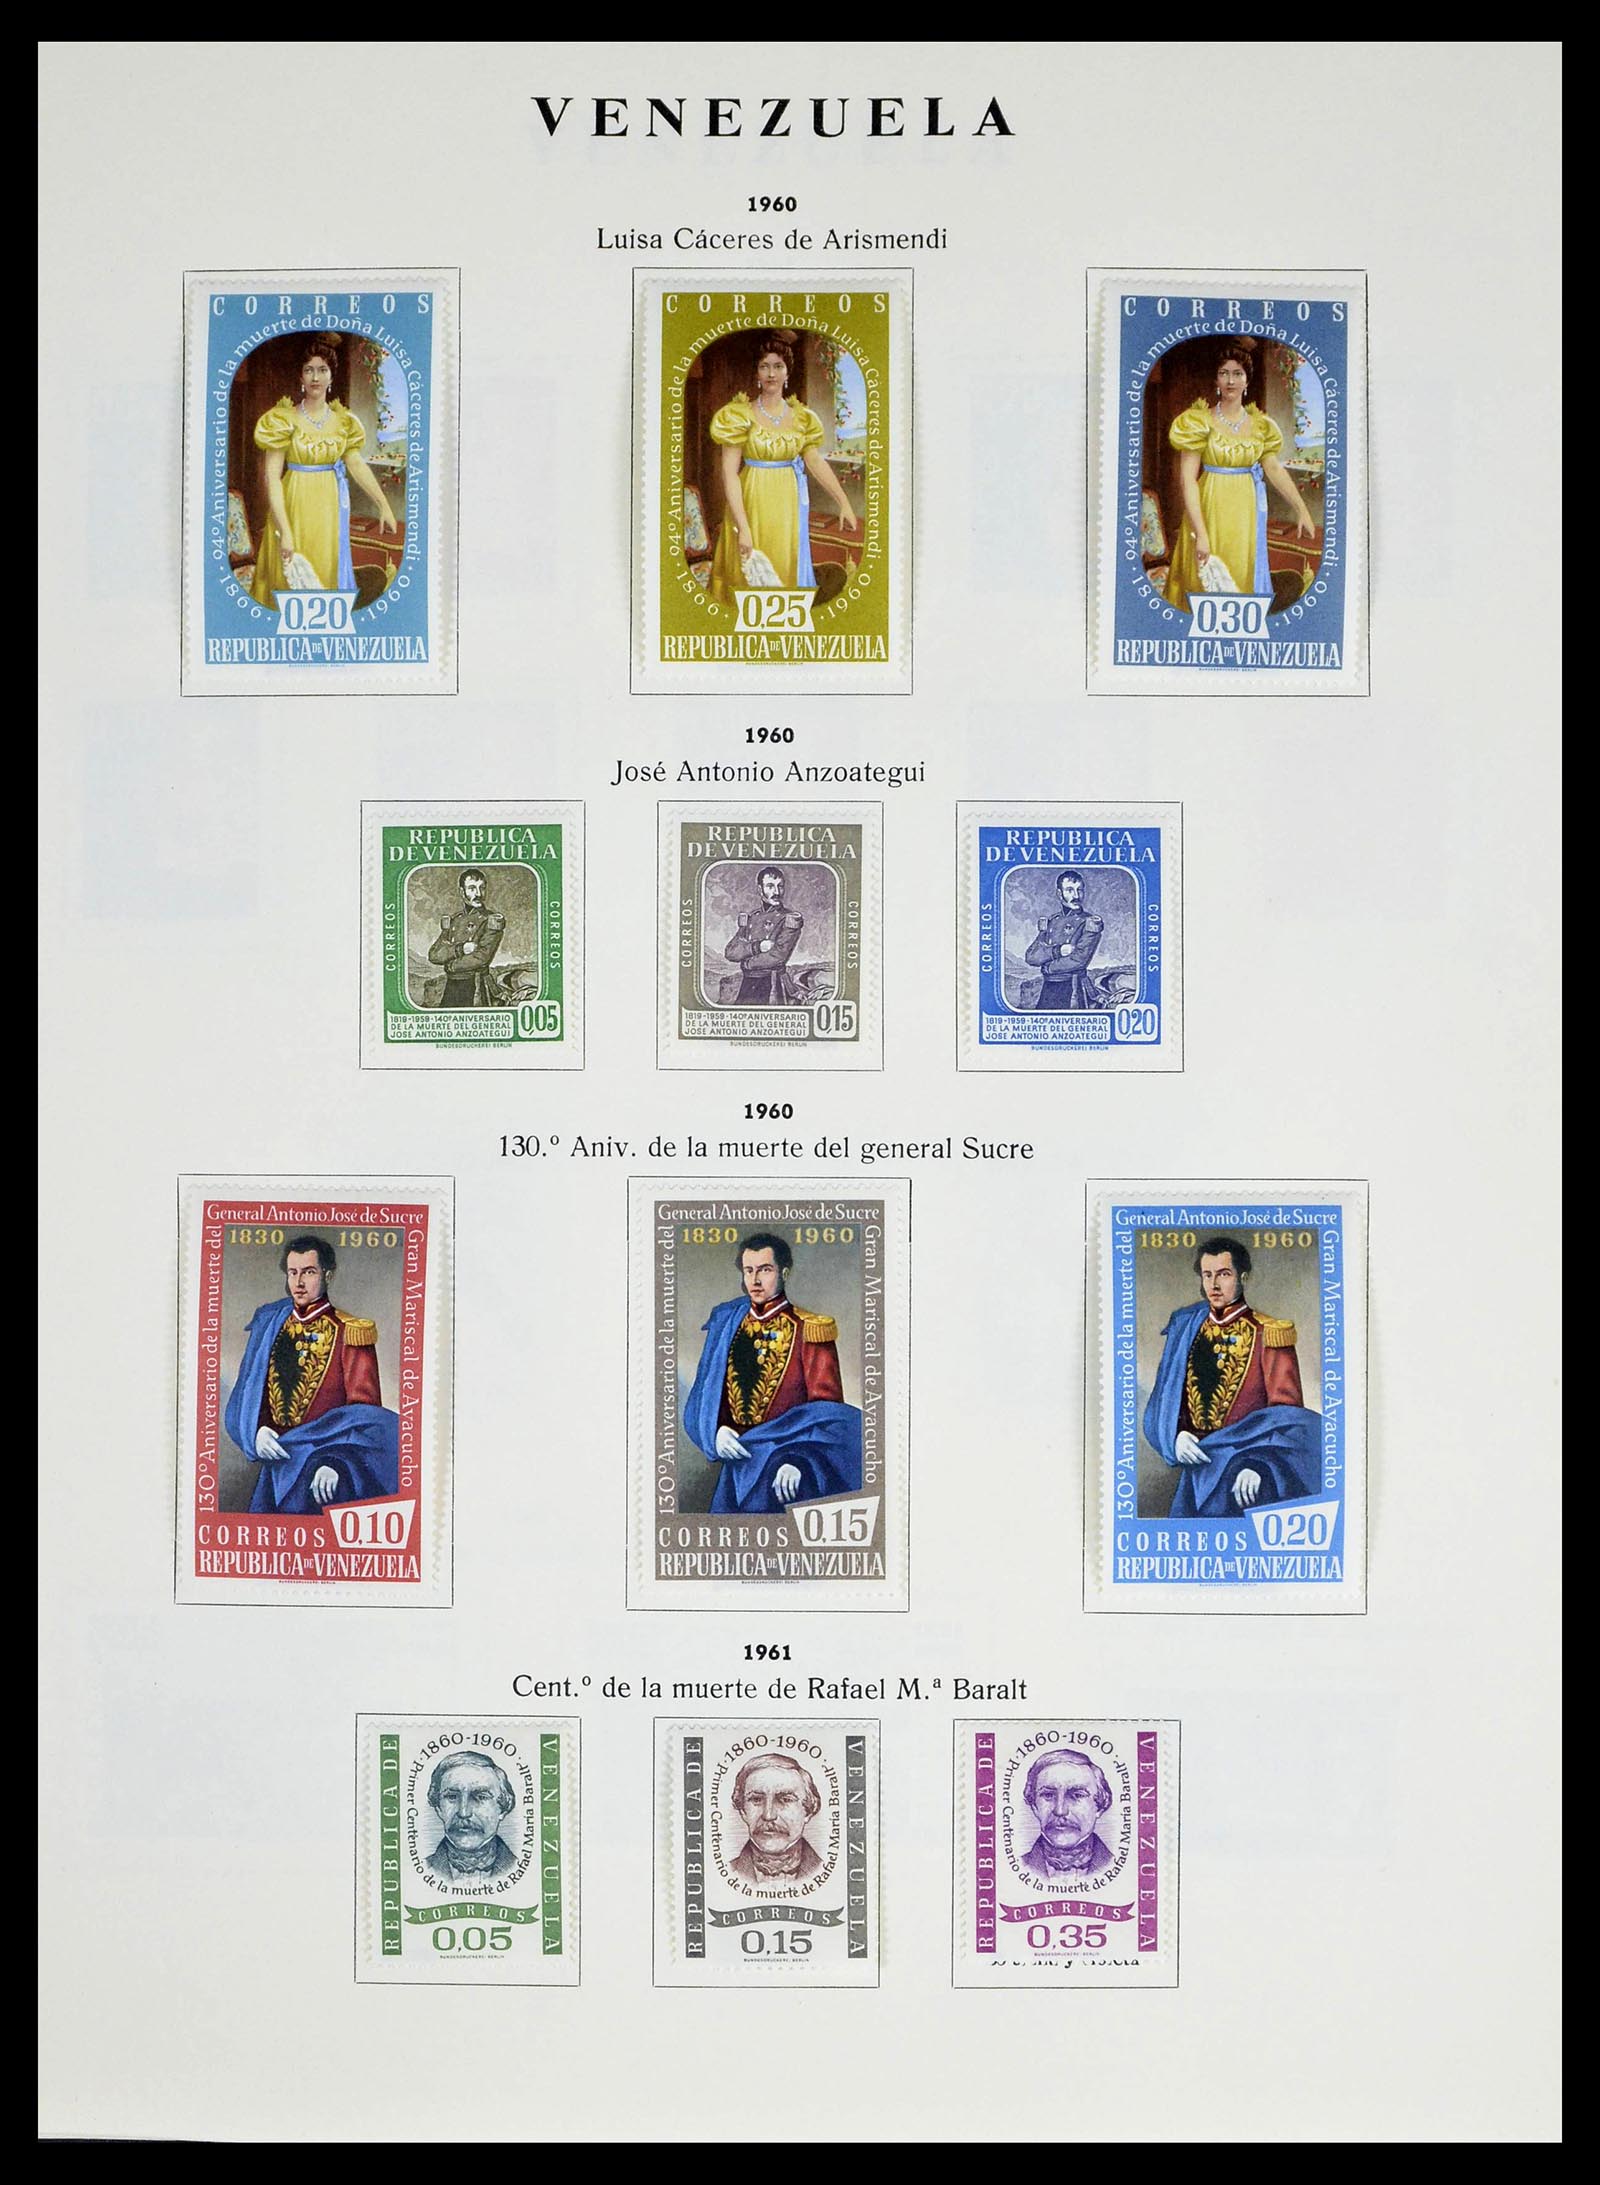 39223 0044 - Stamp collection 39223 Venezuela 1859-1984.